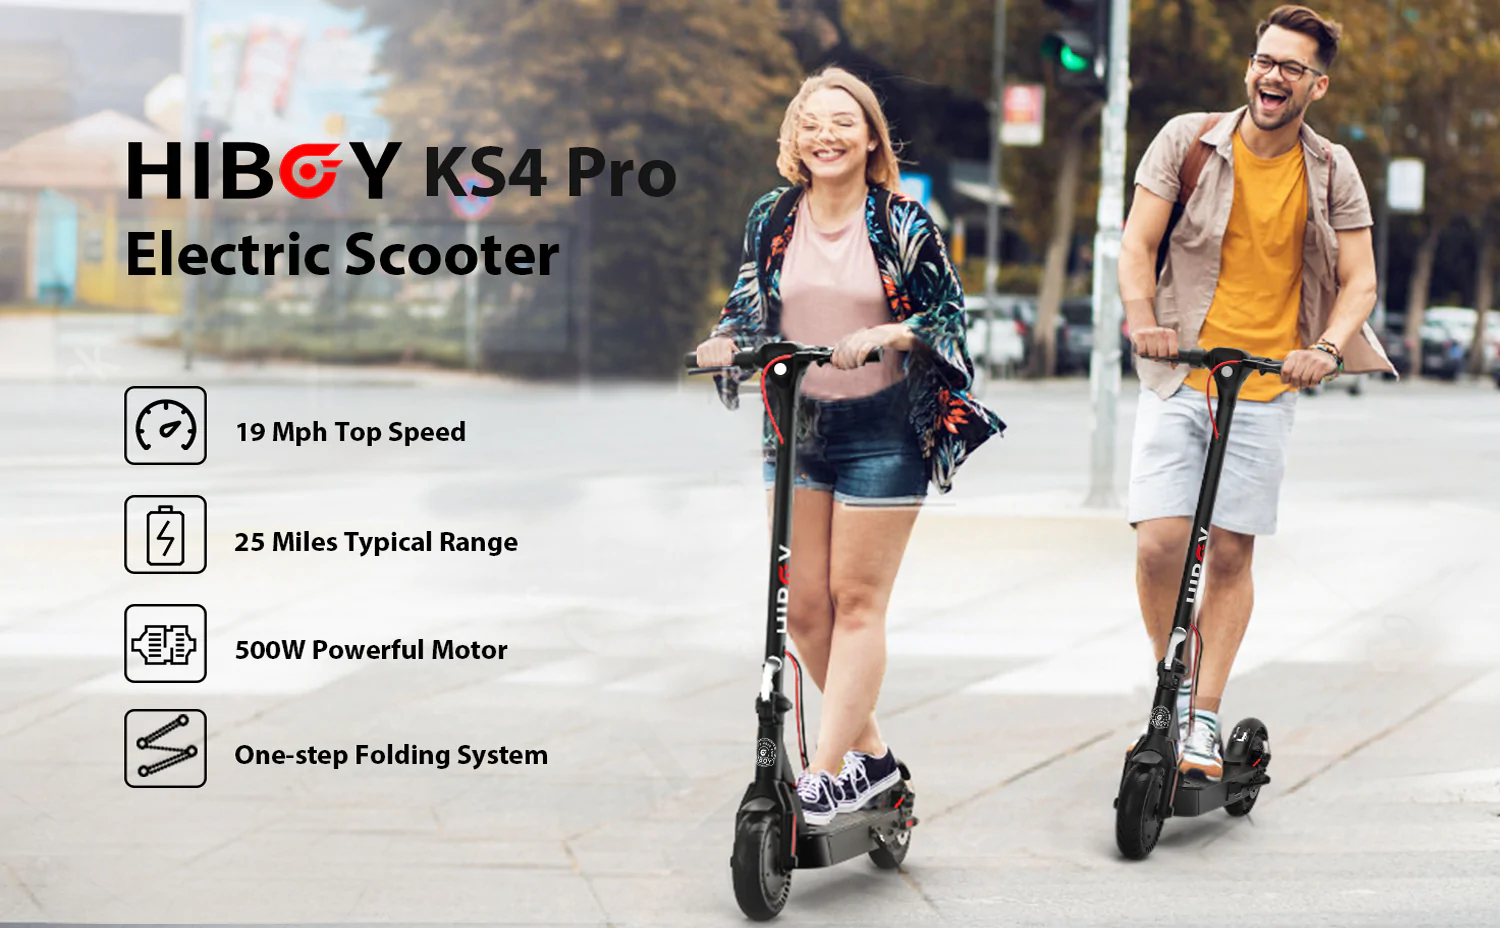 Hiboy KS4 Pro Premium Electric Scooter- features